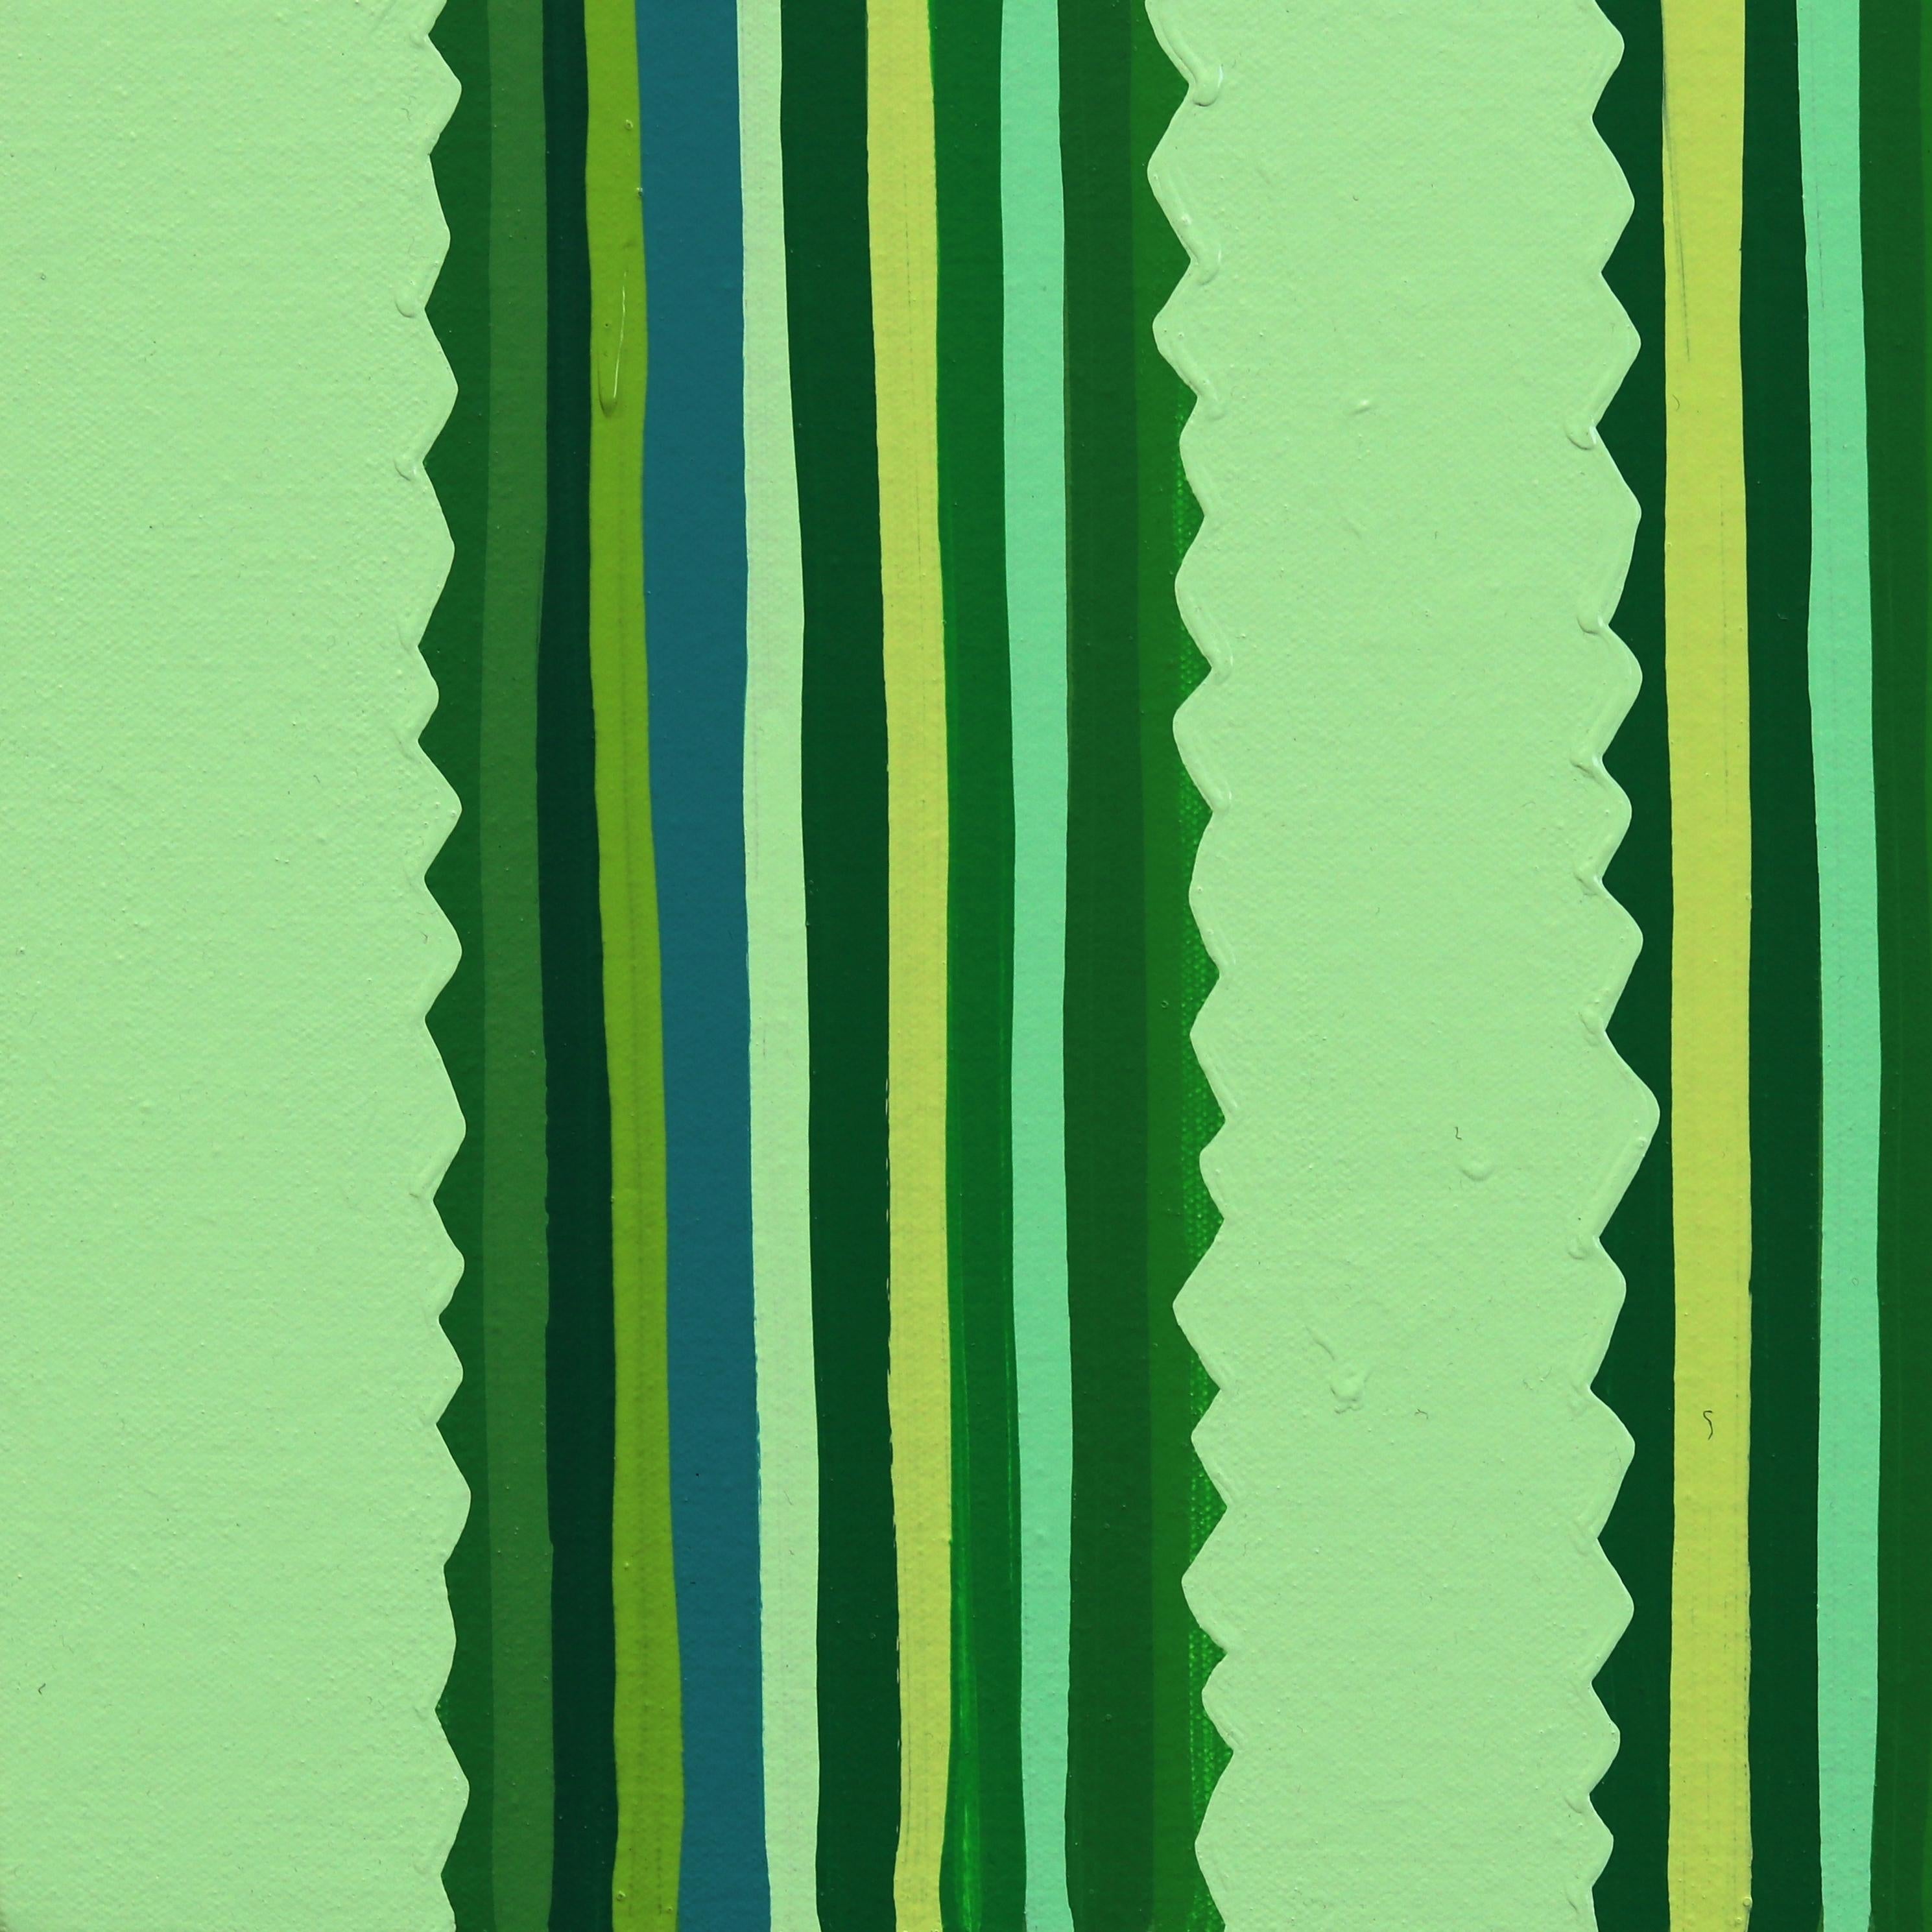 Verde y Verde -  Vibrant Green Southwest Inspired Pop Art Landscape Painting For Sale 5